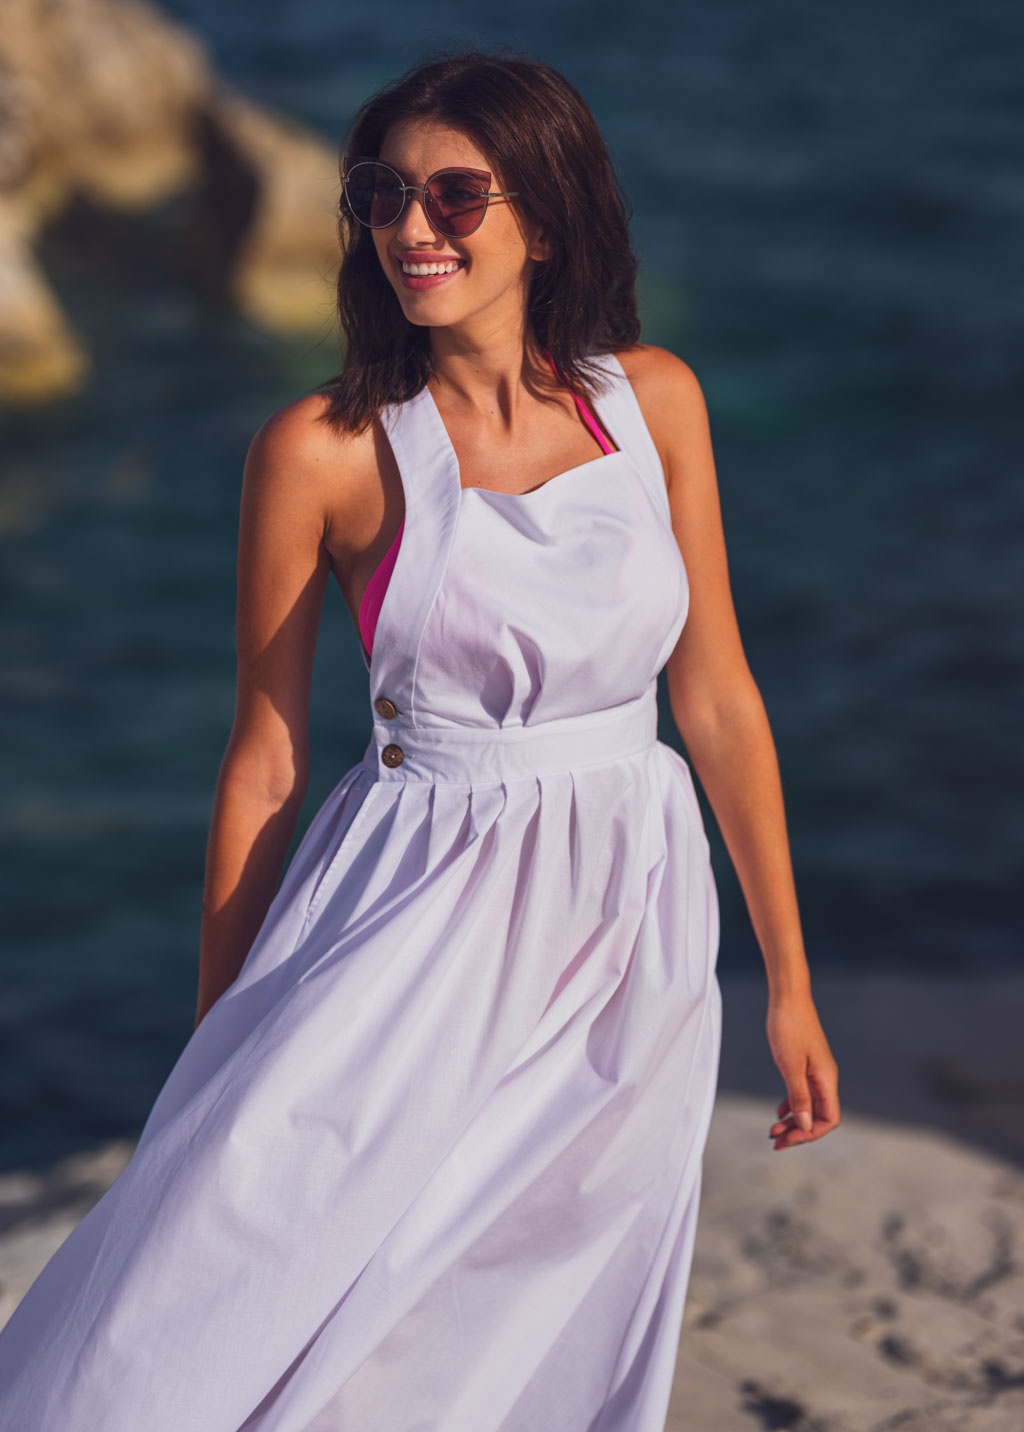 White organic cotton cross-back dress